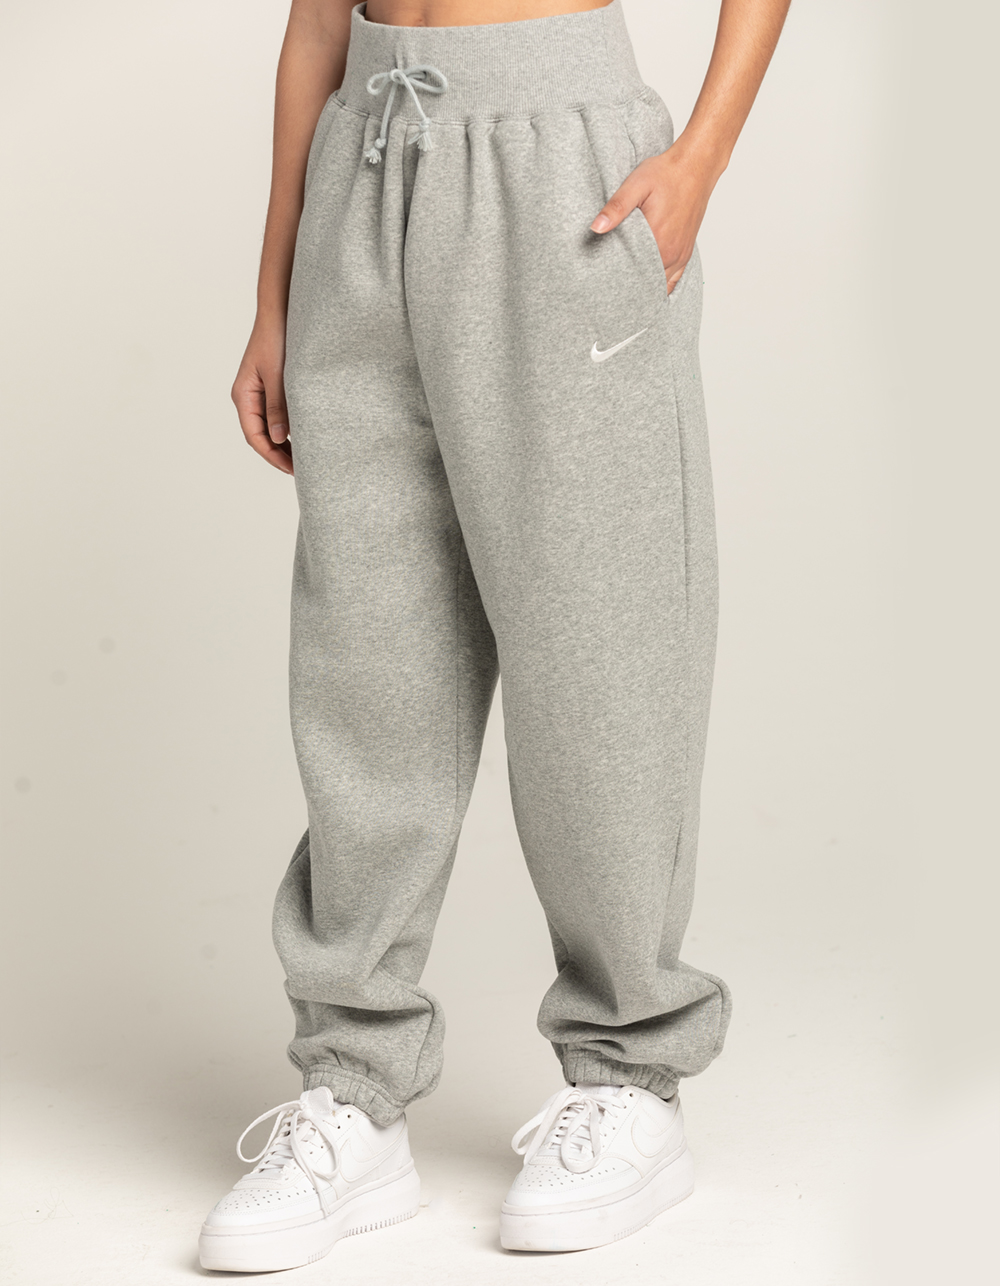 Grey Nike Sweatpants for Women